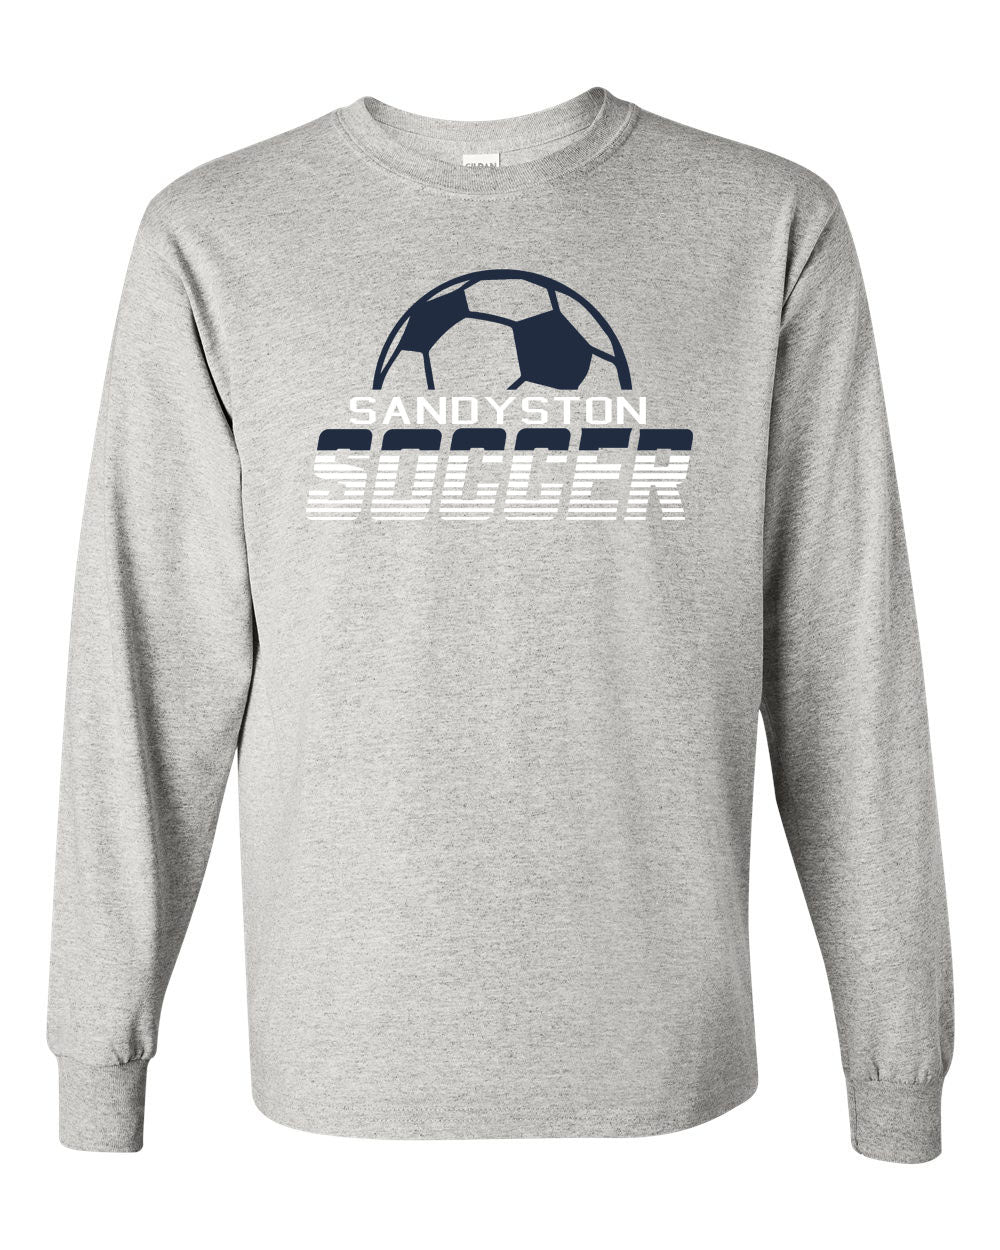 Sandyston Soccer Design 3 Long Sleeve Shirt